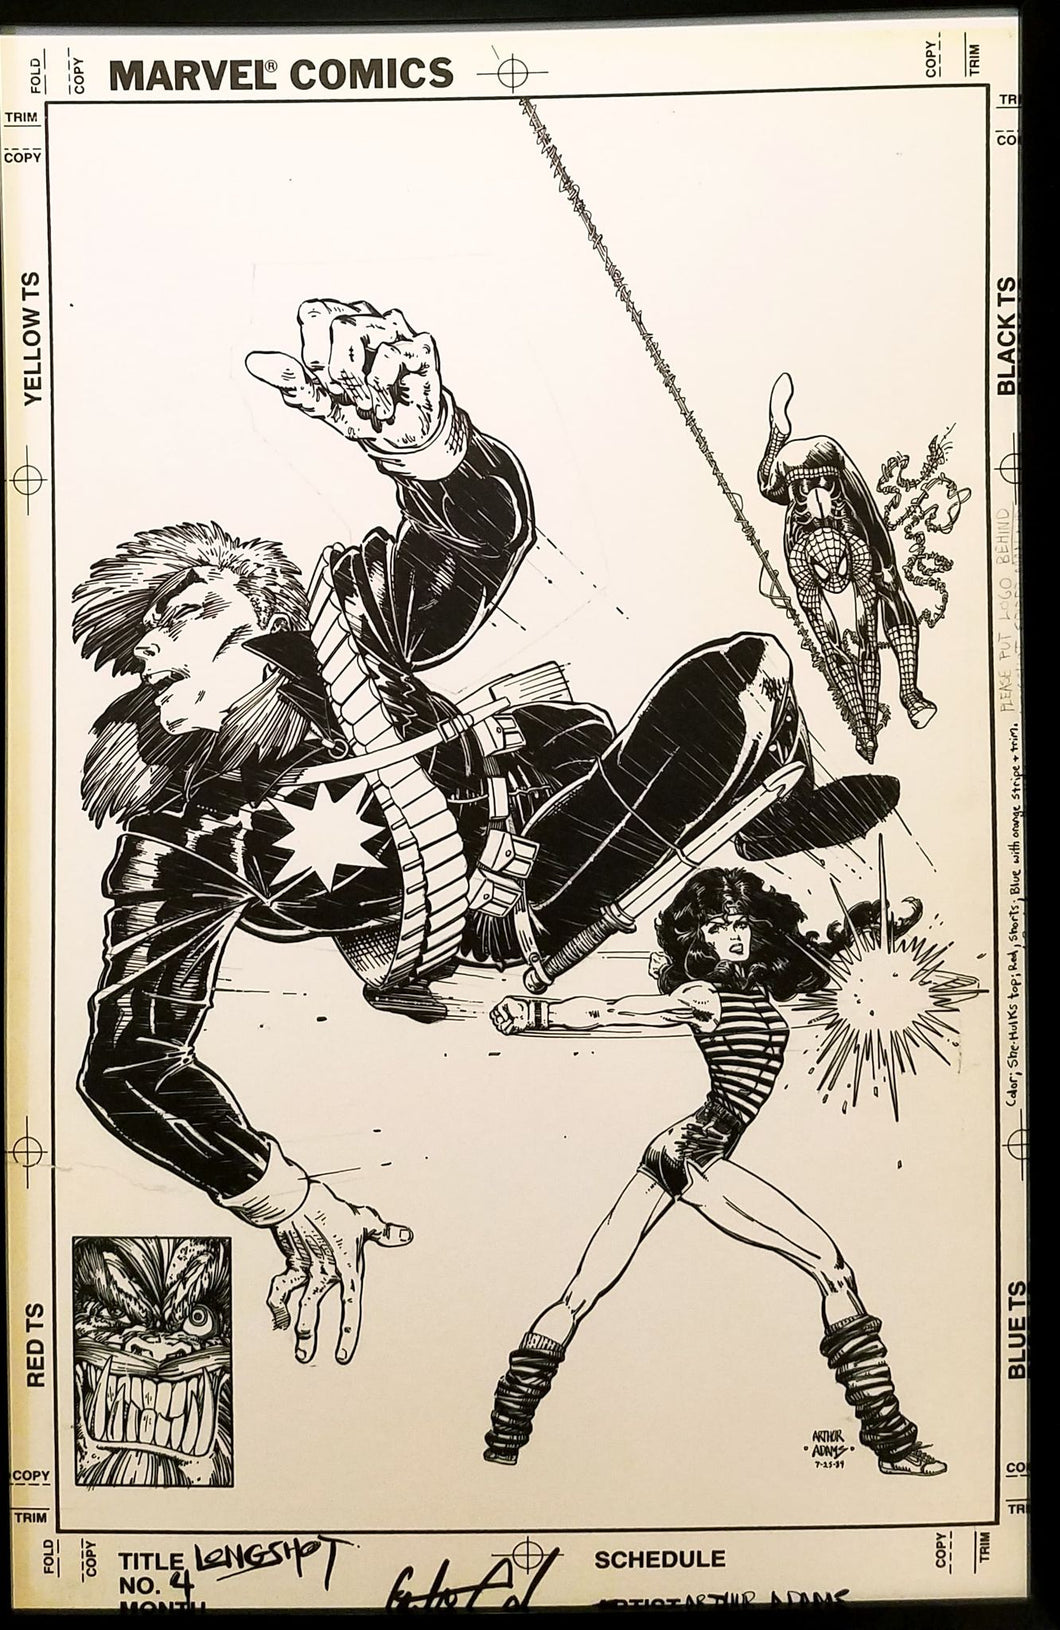 Longshot #4 w/ She-Hulk by Art Adams 11x17 FRAMED Original Art Poster Marvel Comics